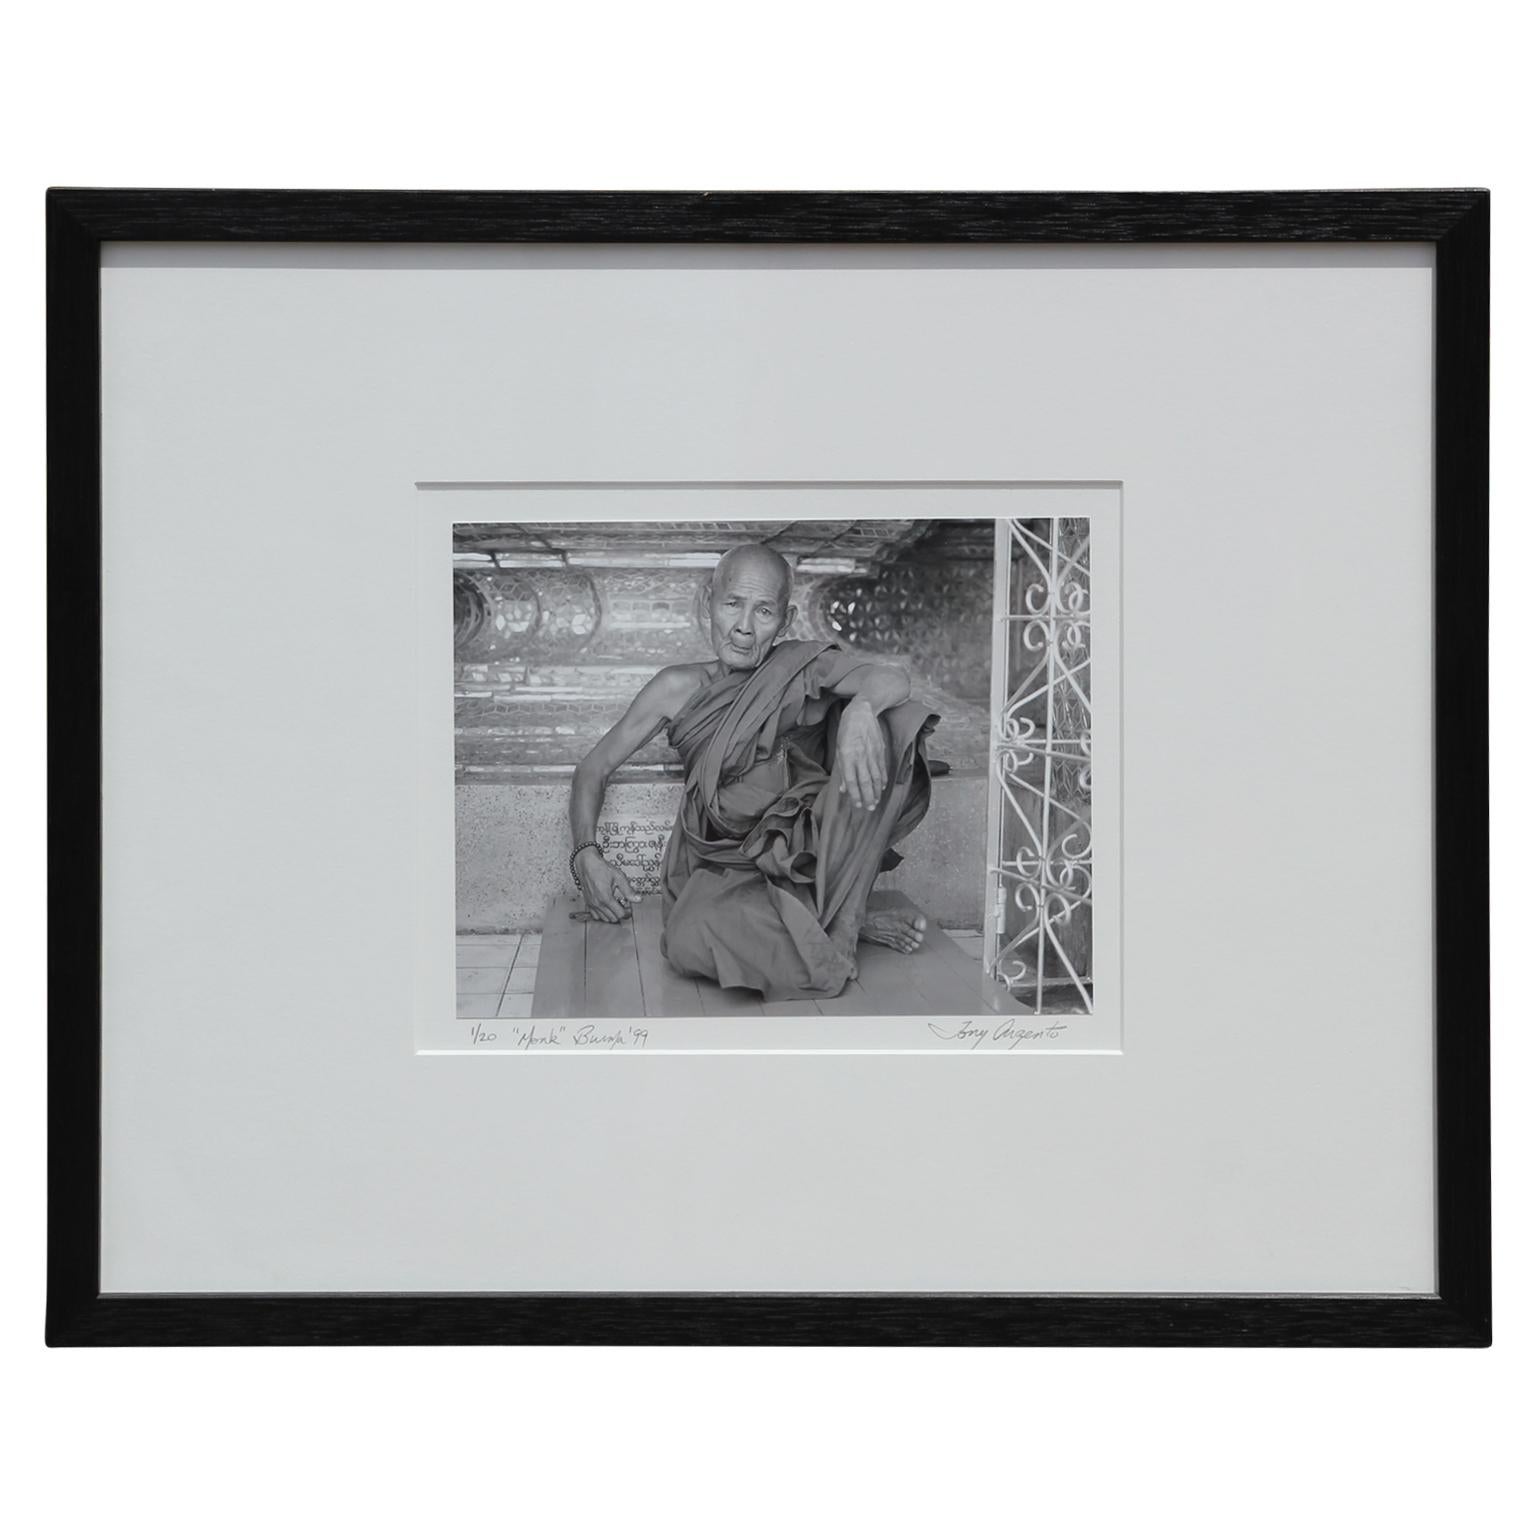 Tony Argento Black and White Photograph - "Monk" Rangoon, Burma Black and White Figurative Photograph